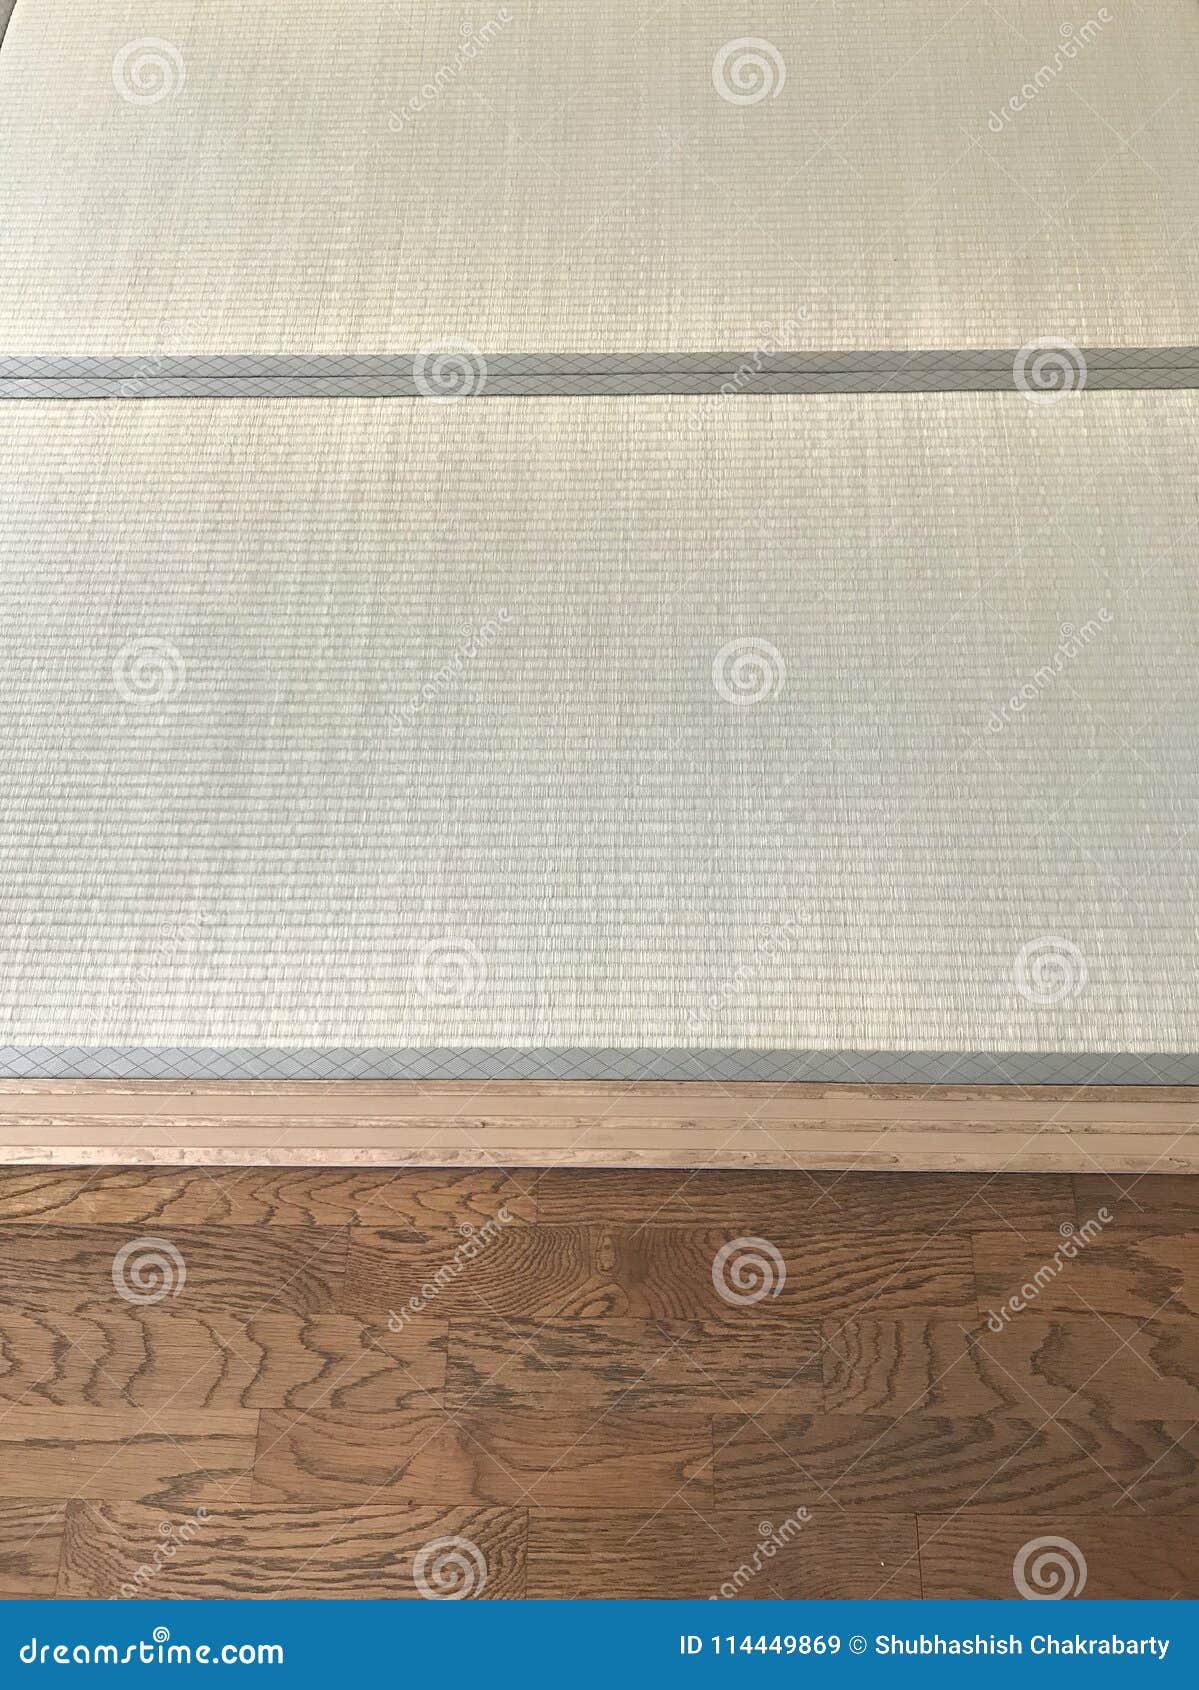 Japanese Tatami Mat Floor Texture . Stock Image - Image of detail